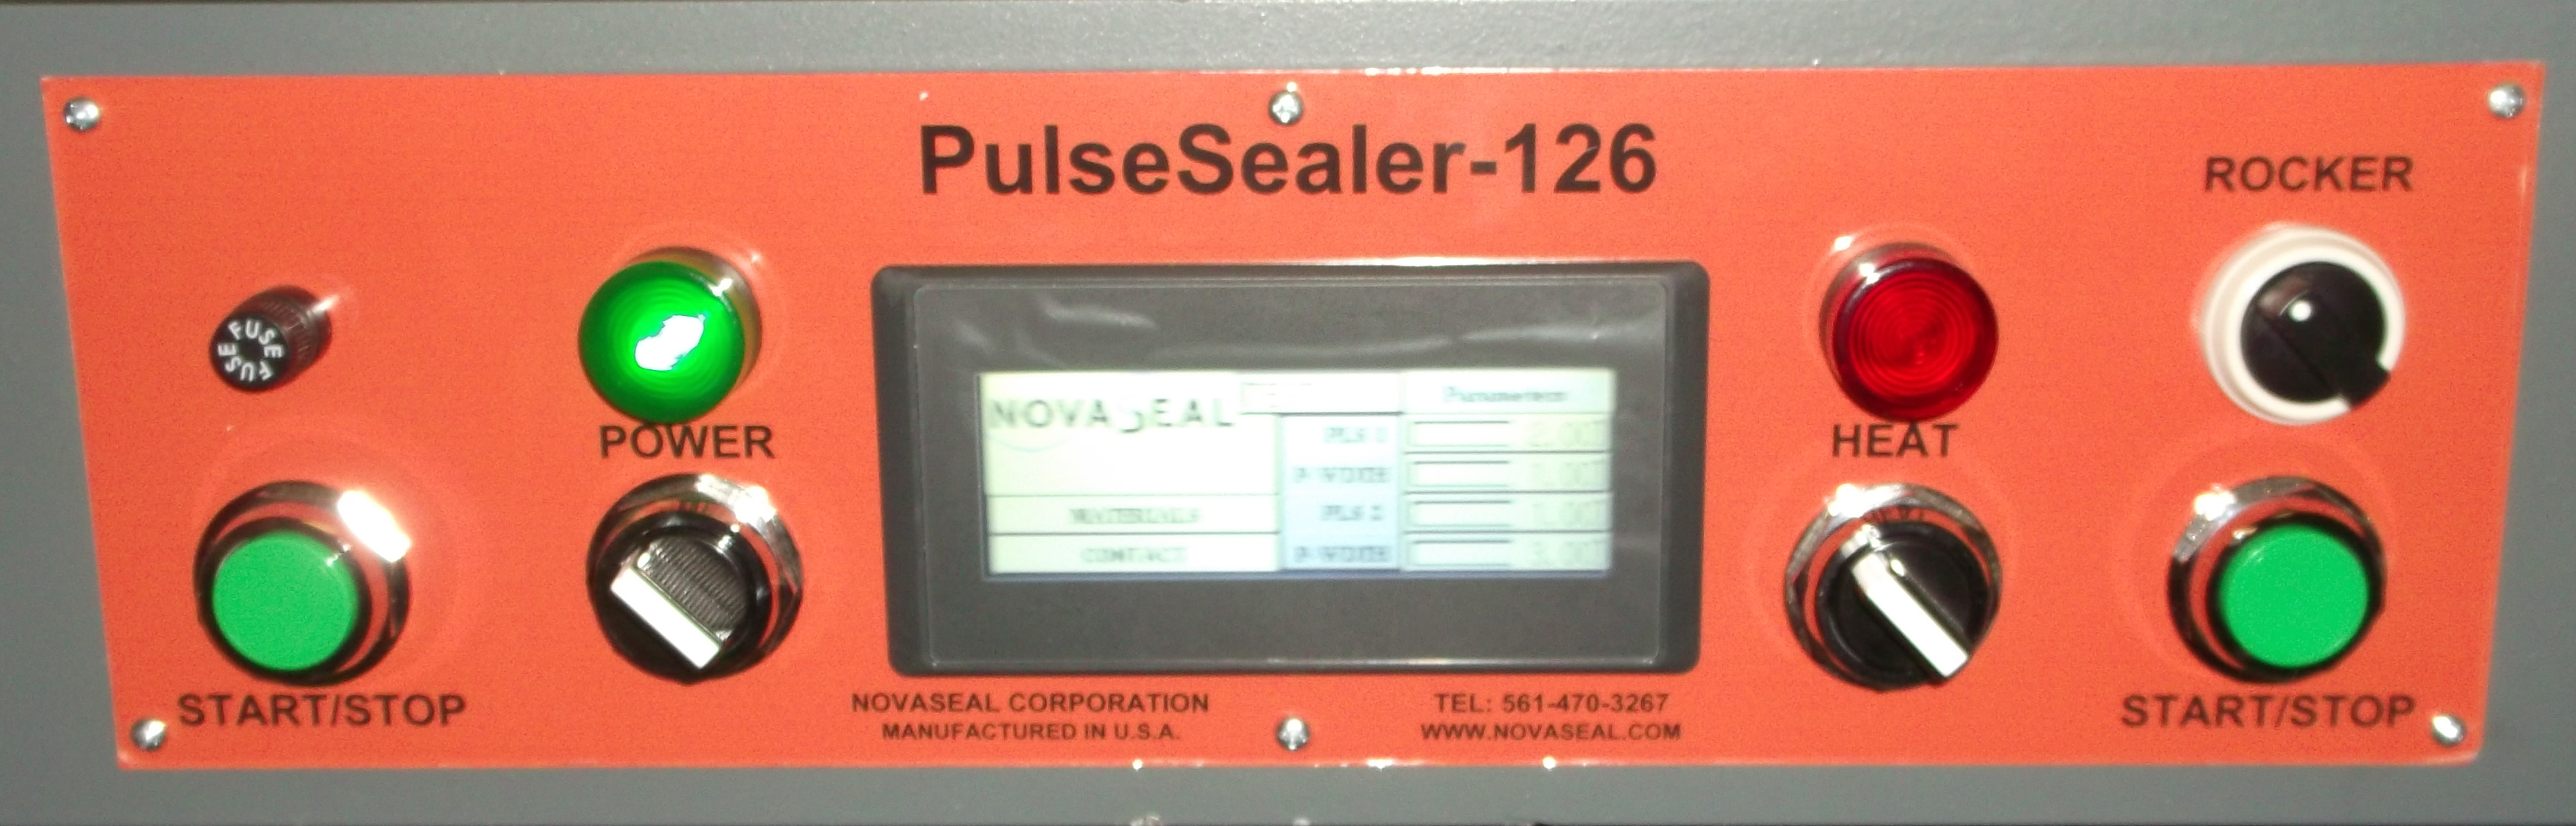 Novaseal TableTop PulseSealer